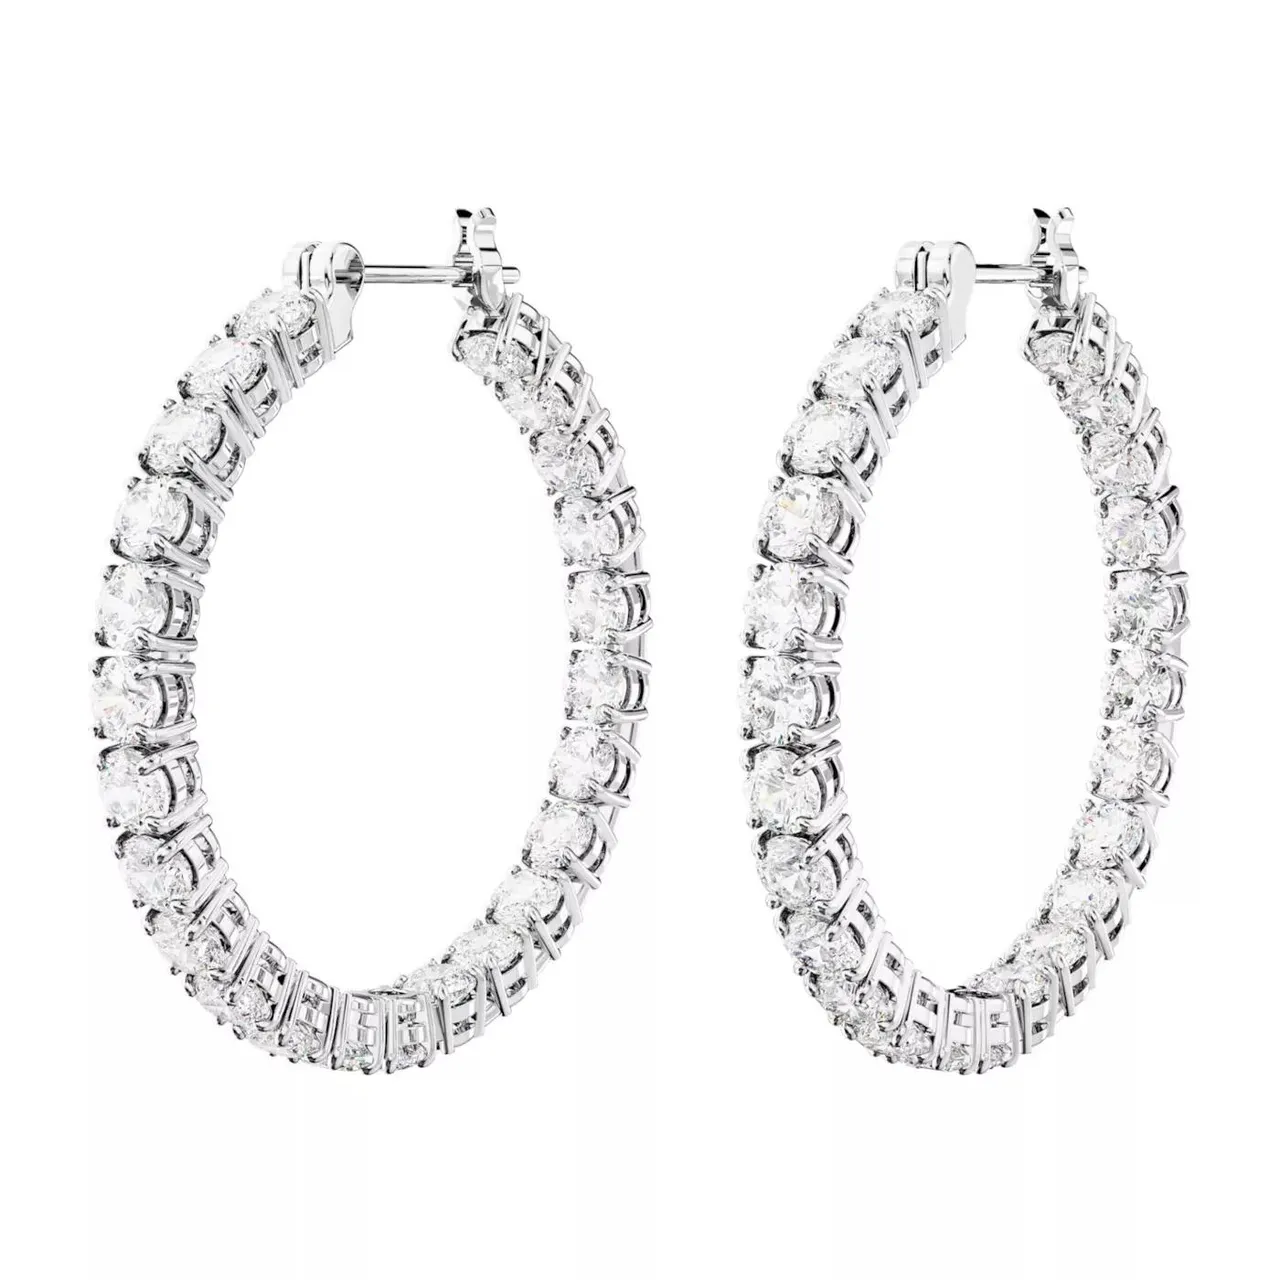 Swarovski Earrings - Swarovski Matrix Silberfarbene Ohrringe 5647715 - silver - Earrings for ladies